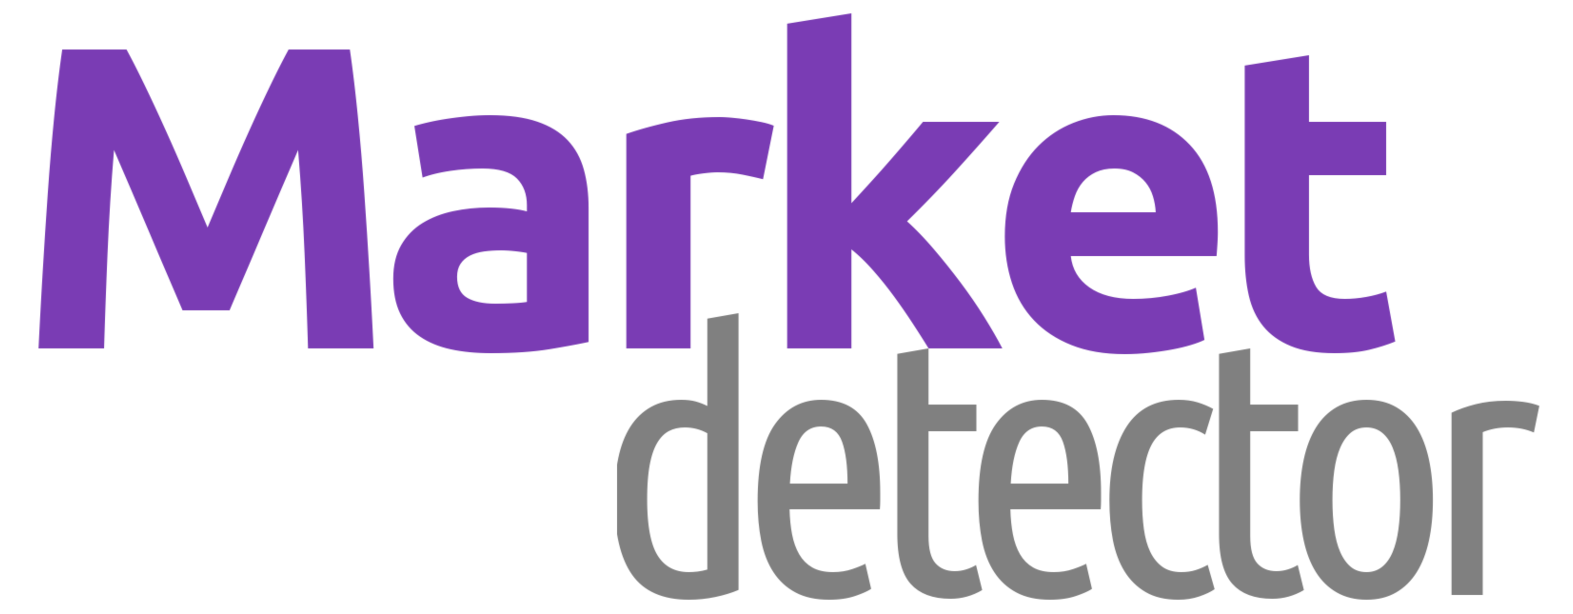 Market Detector